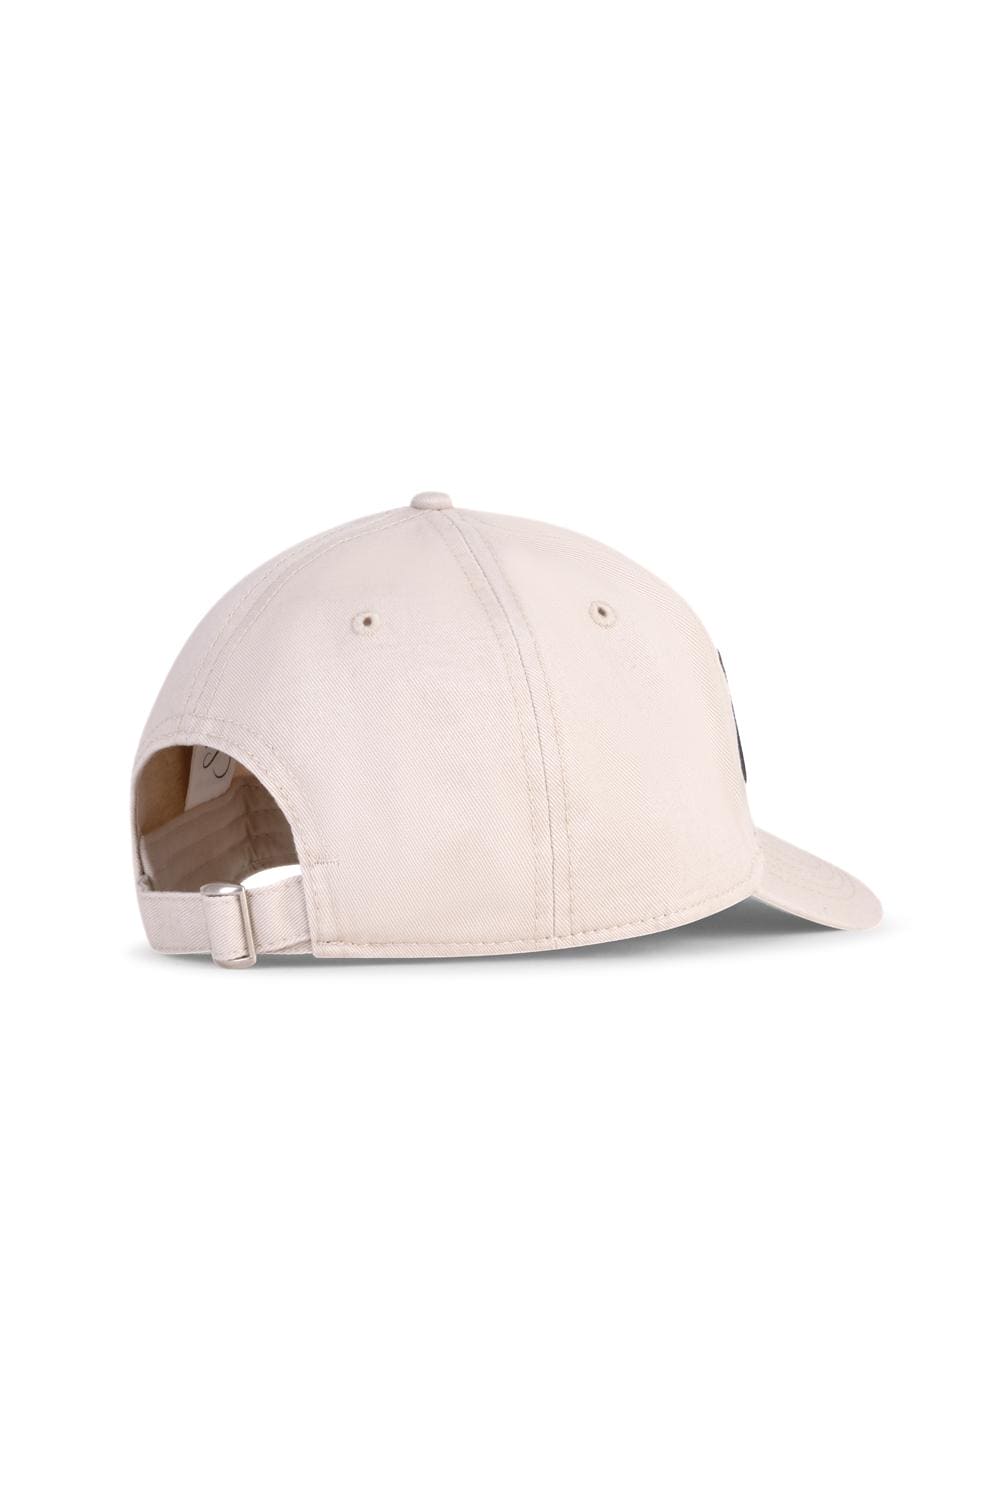 CLEAN RUN -  BEIGE CAP